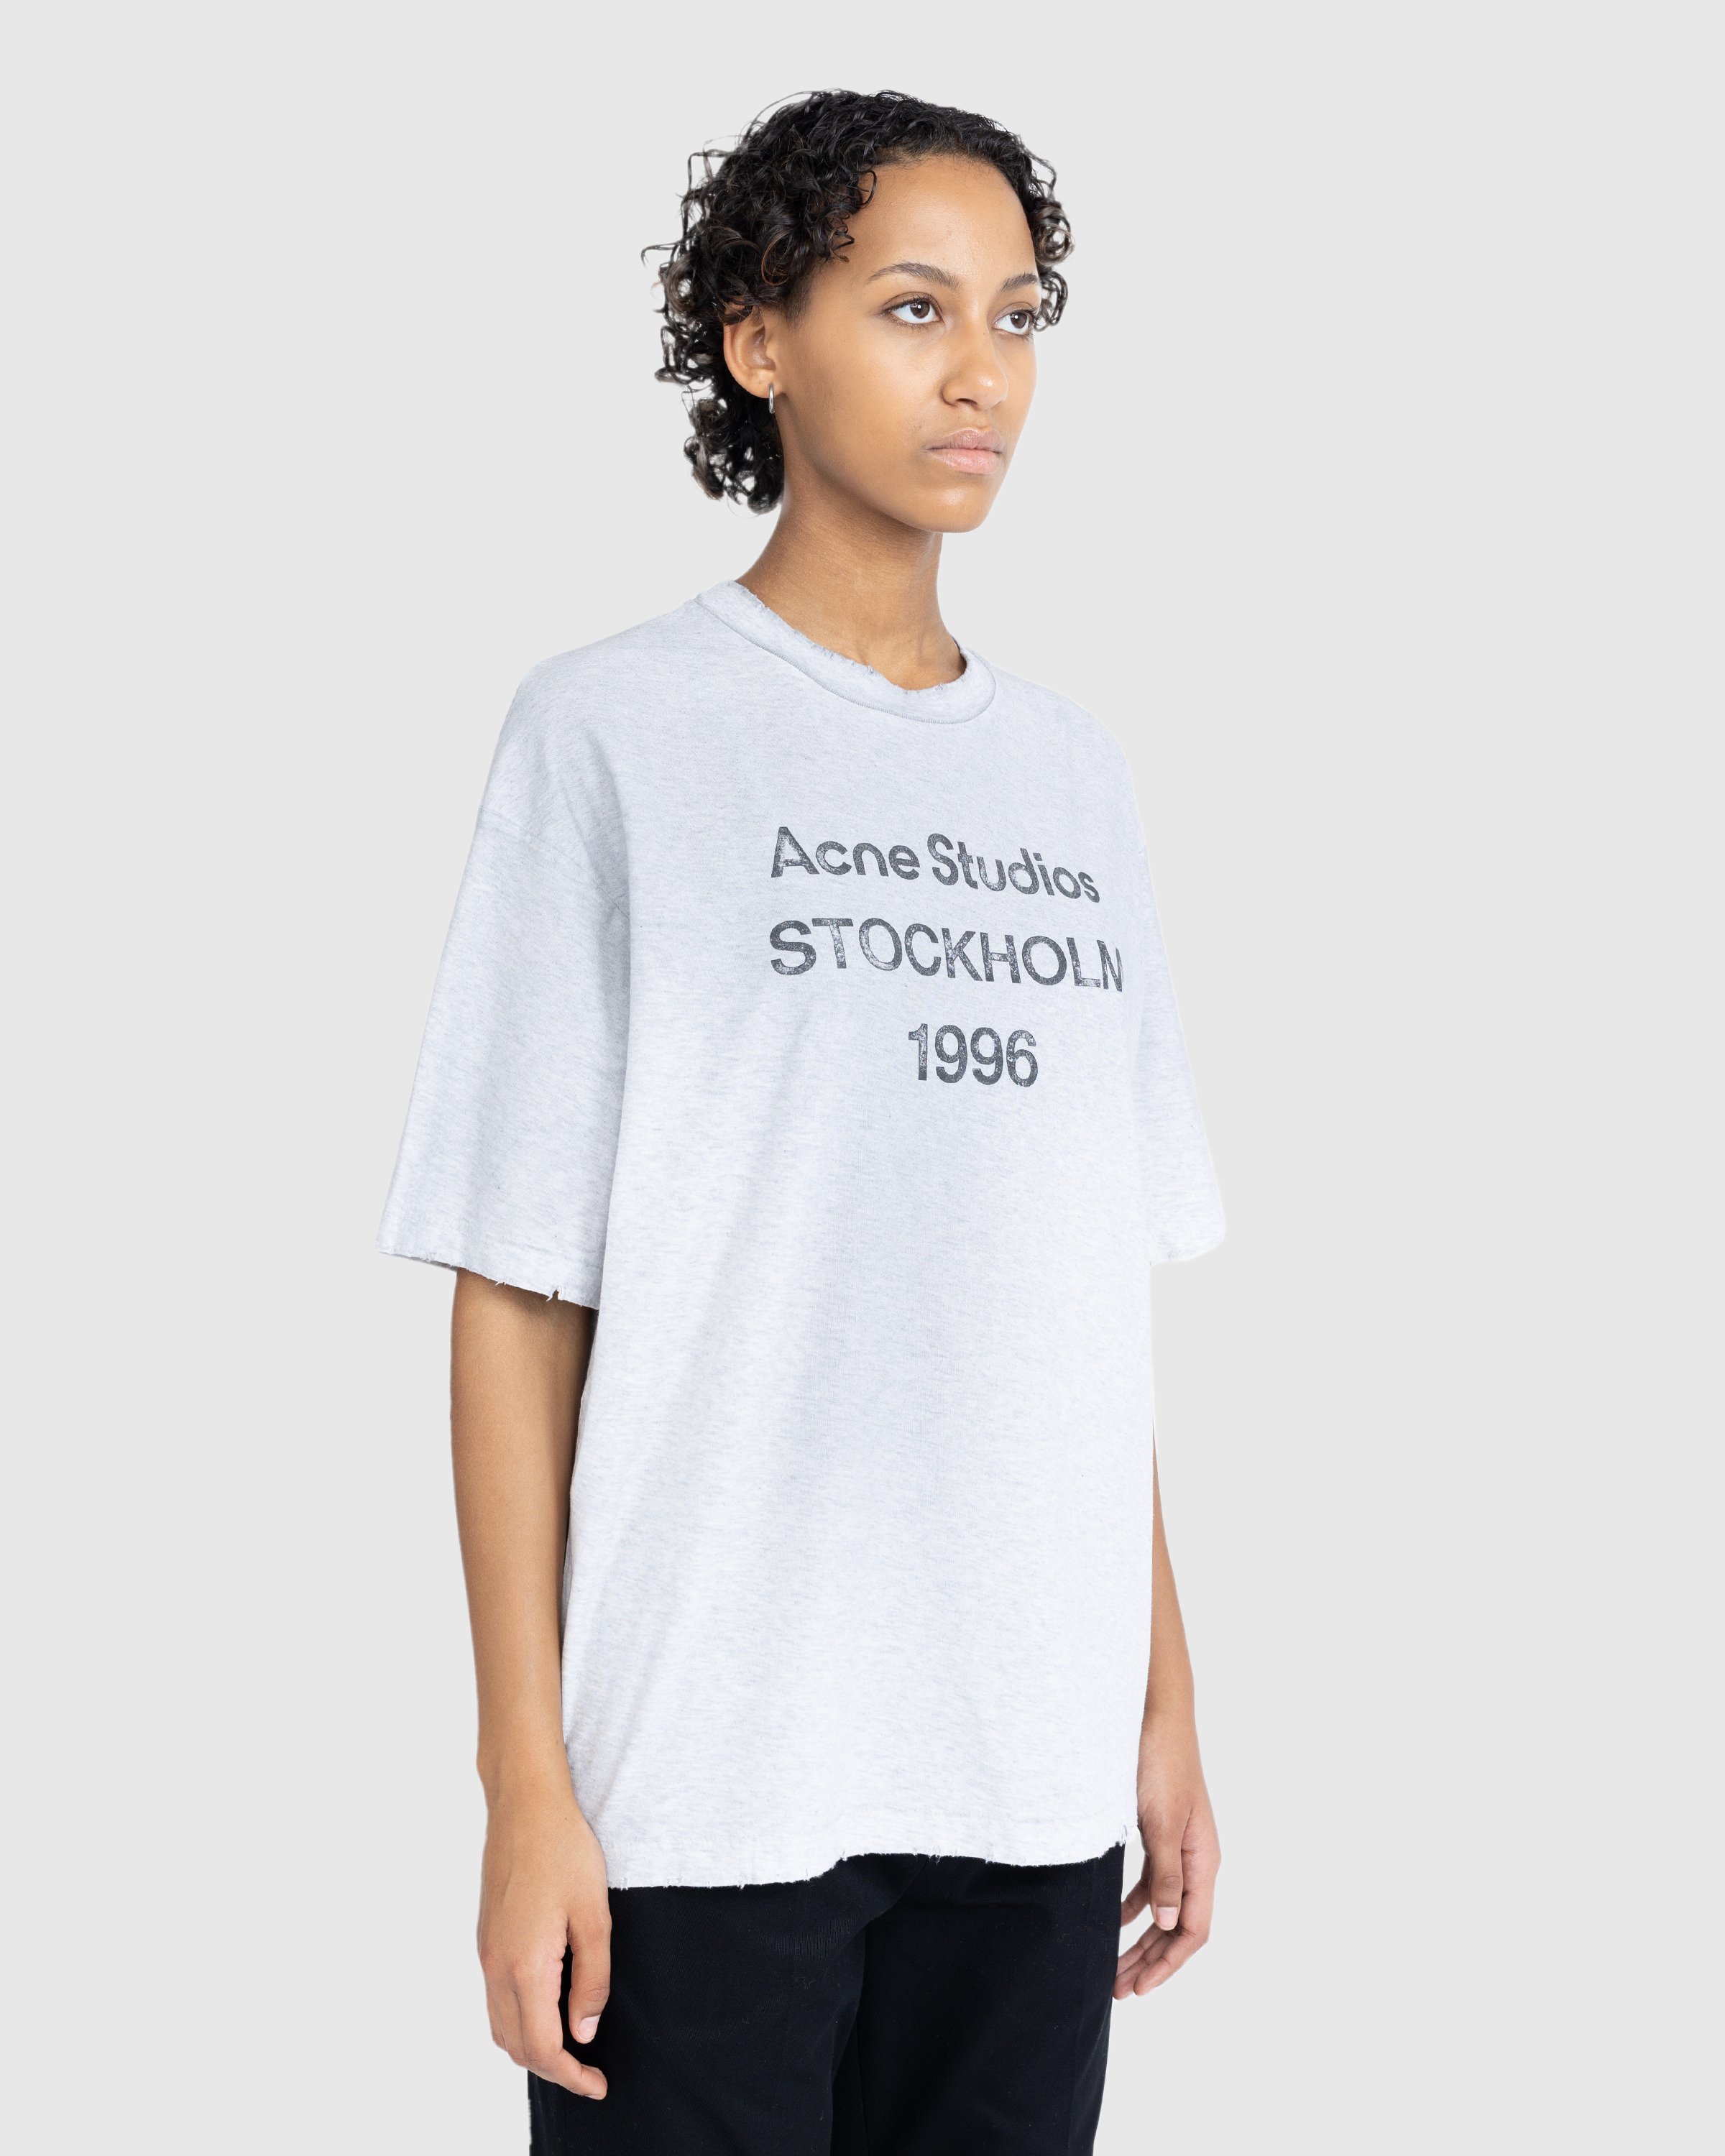 Acne Studios - Stockholm 1996 T-Shirt Grey - Clothing - Grey - Image 3